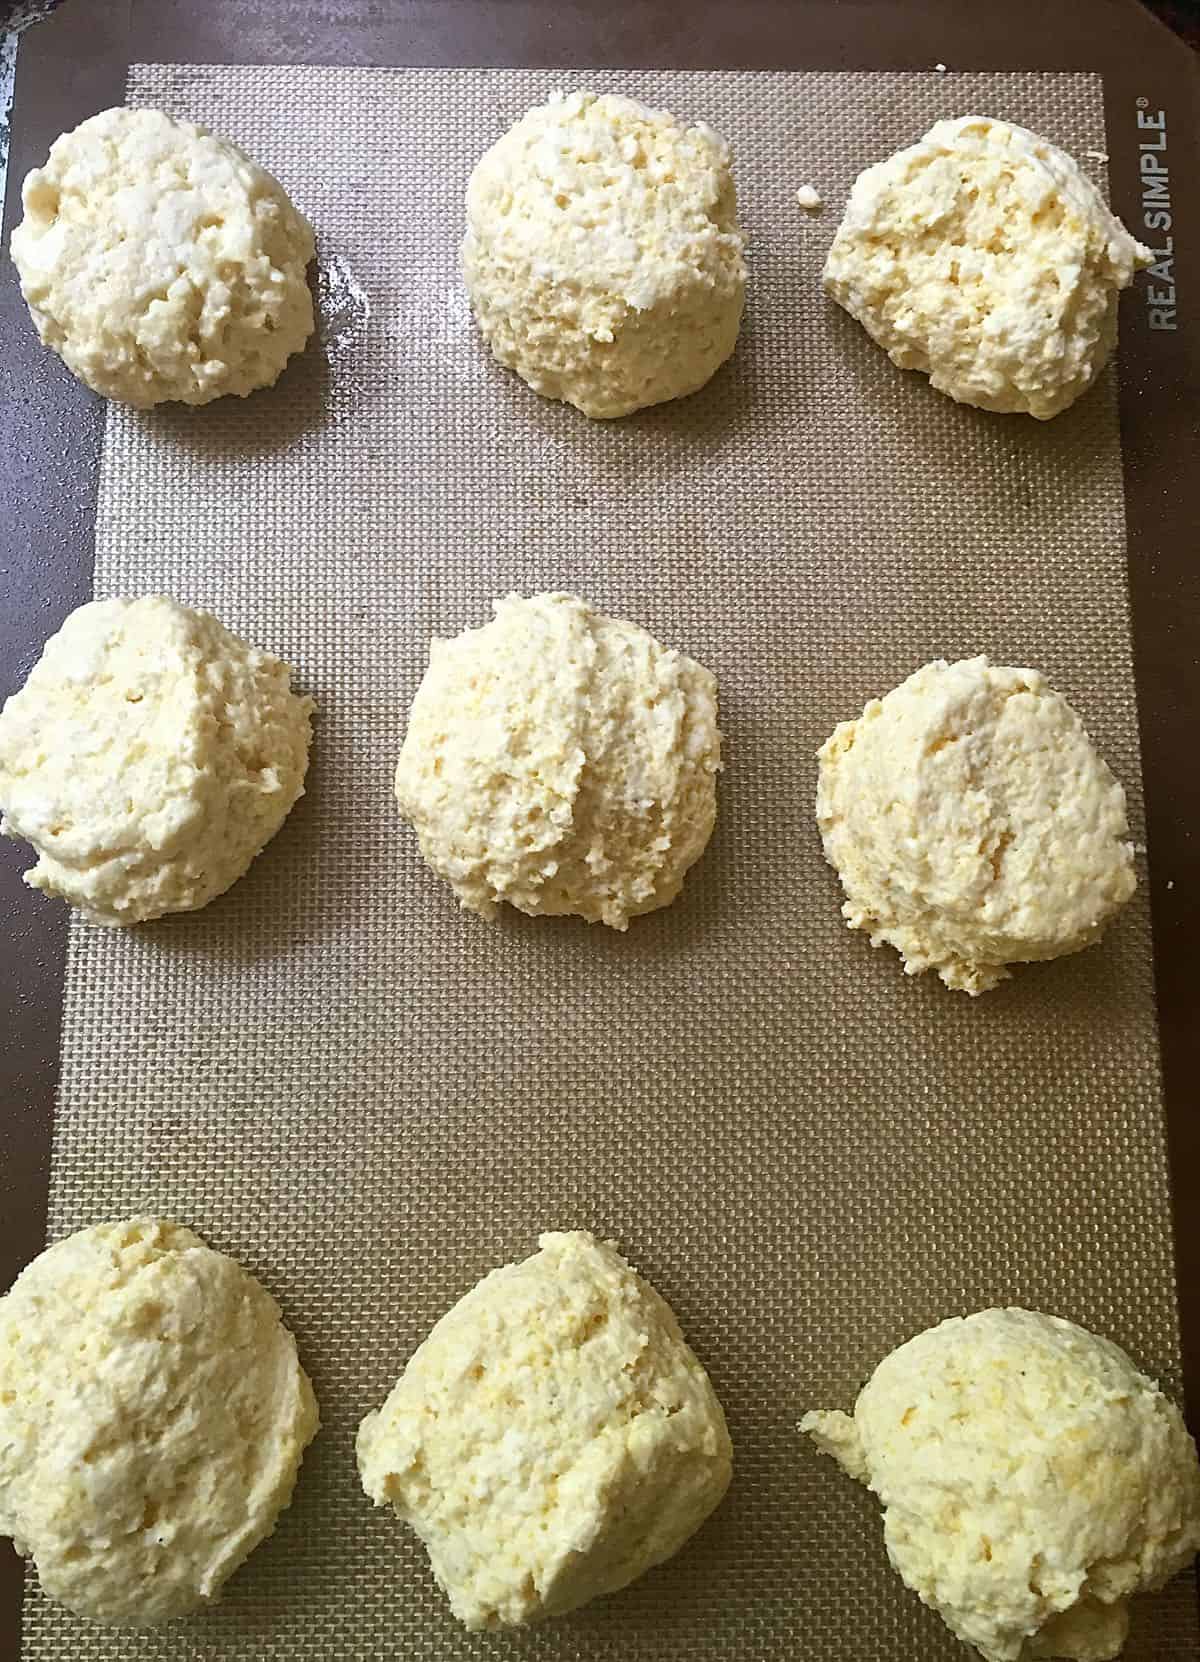 Southern shortcake biscuit dough on a baking sheet.